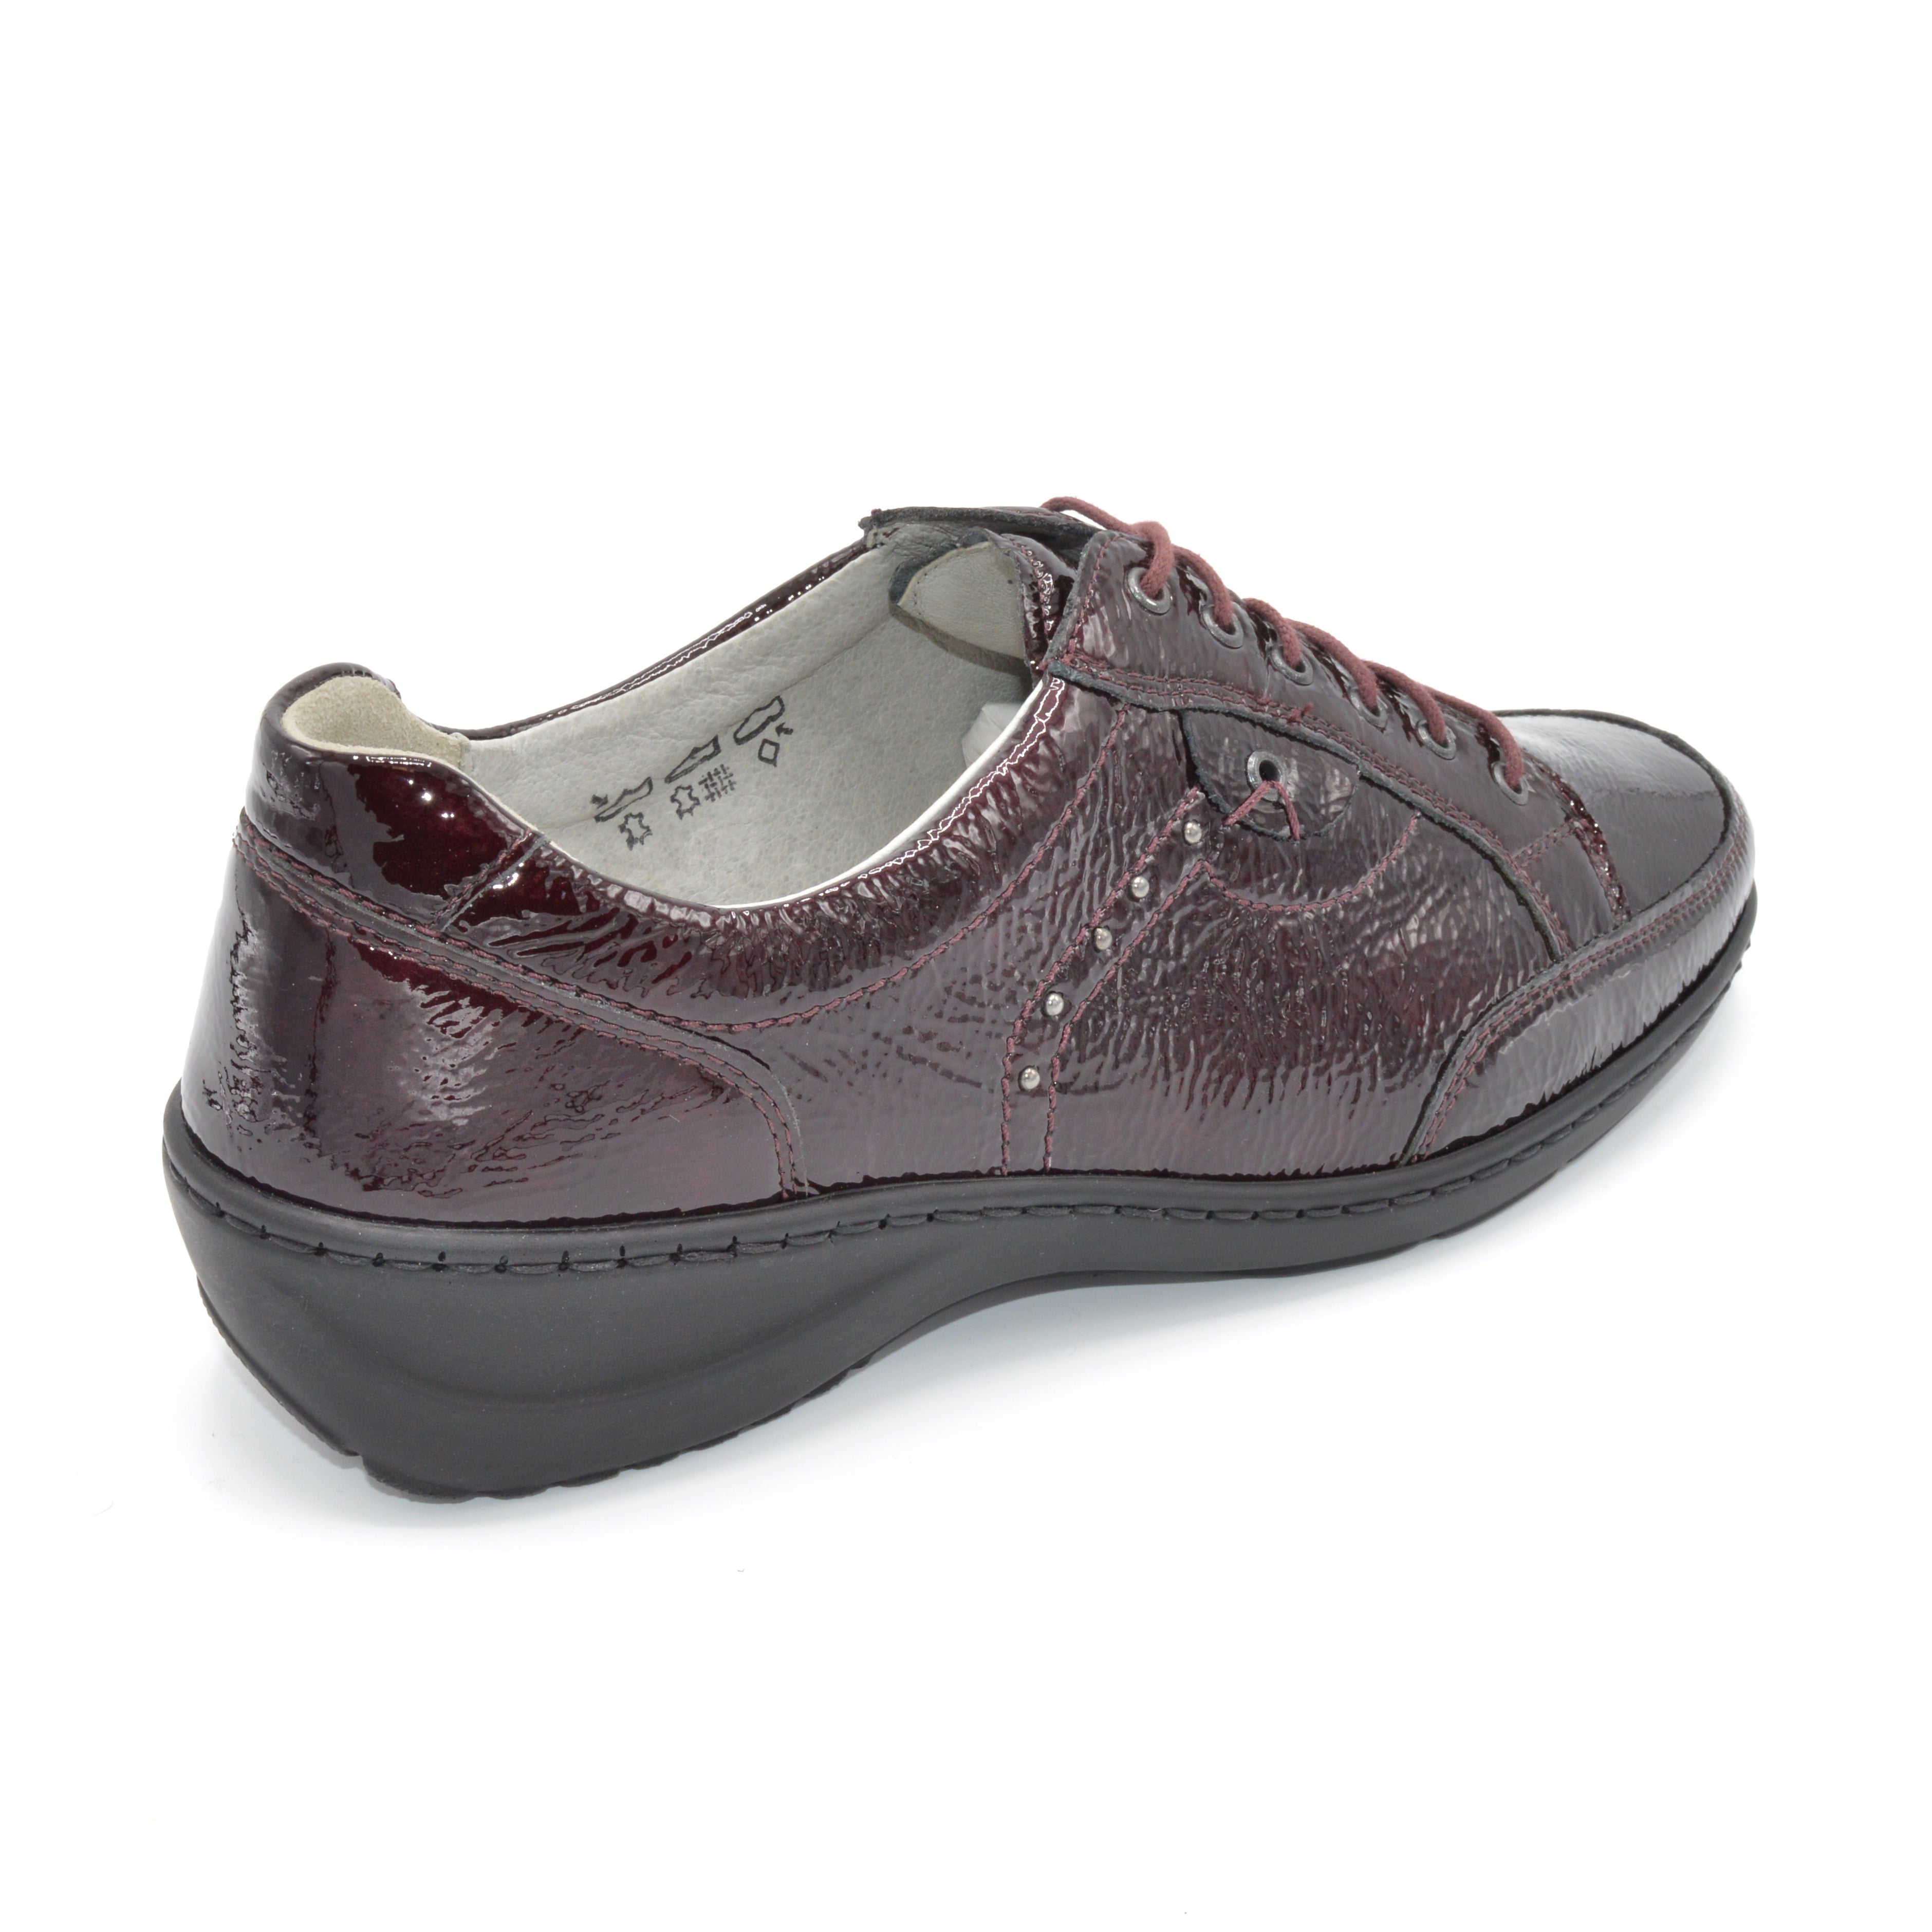  Ladies Burgundy Velcro Shoe For Bunions